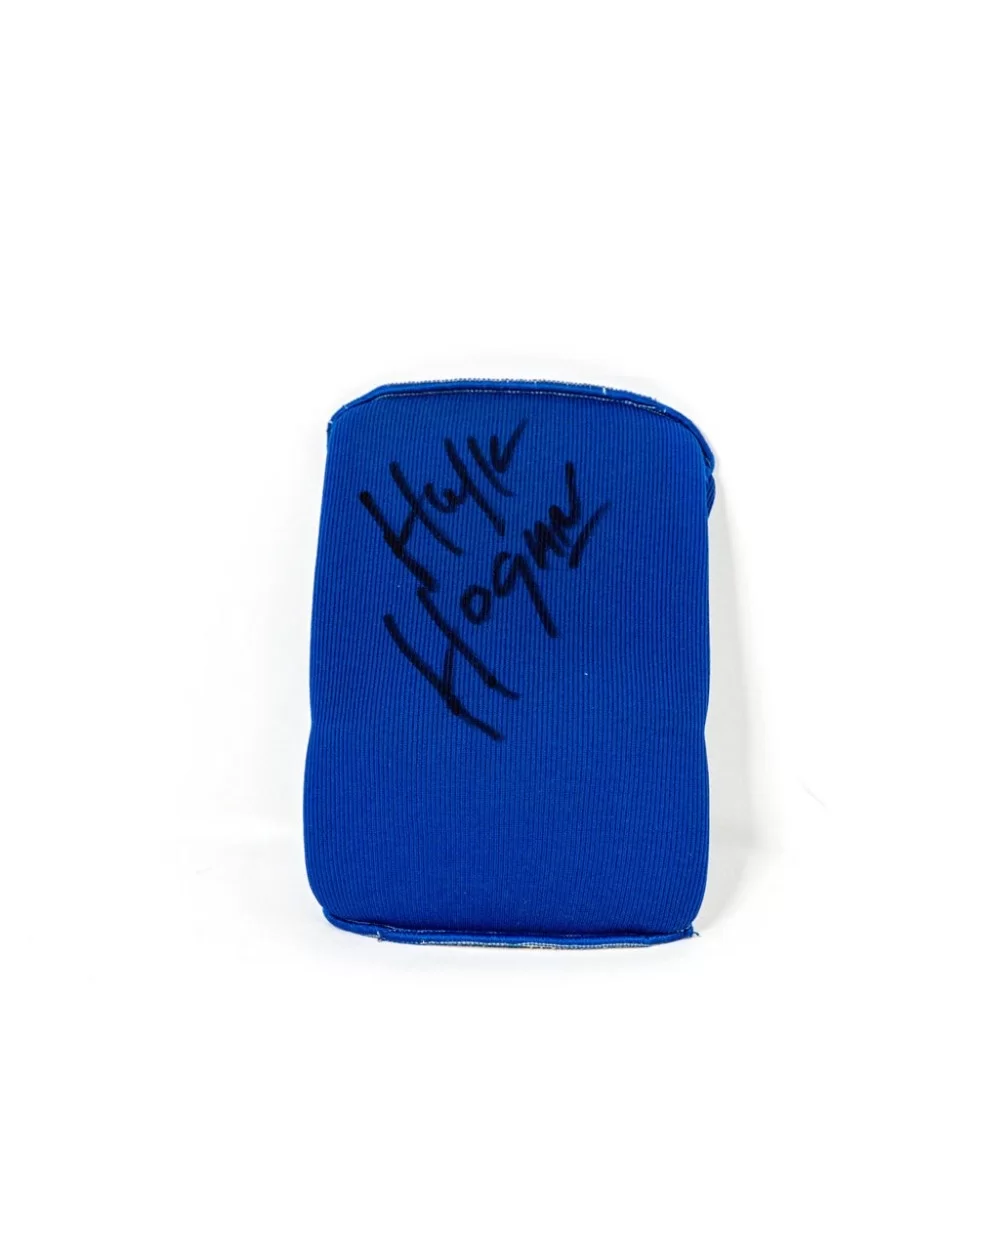 Hulk Hogan Signed Blue Knee Pads $896.00 Signed Items